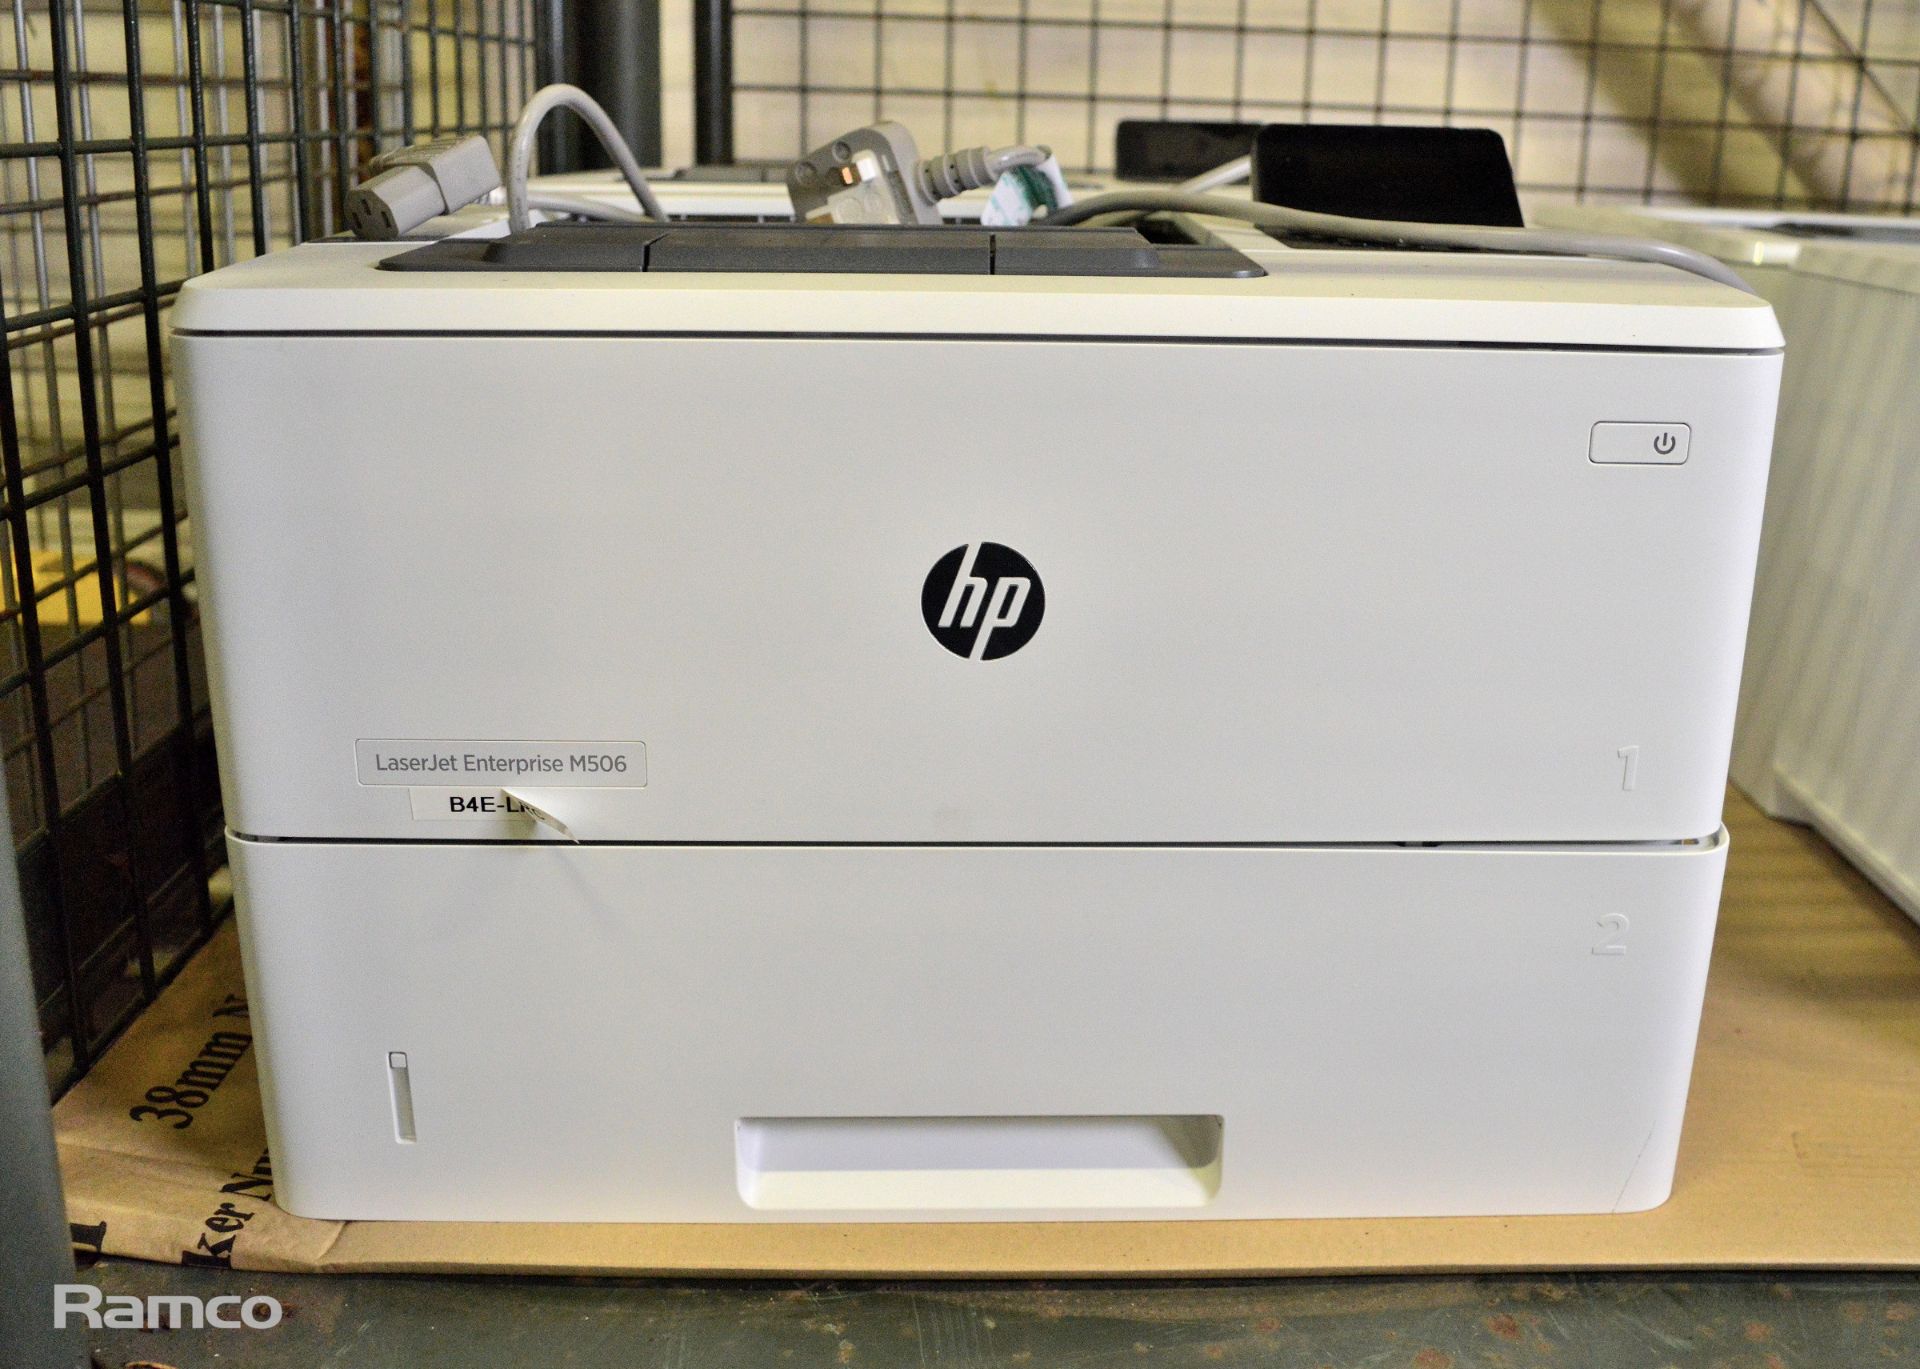 4x HP Laserjet Enterprise M506 Printers - Image 2 of 4